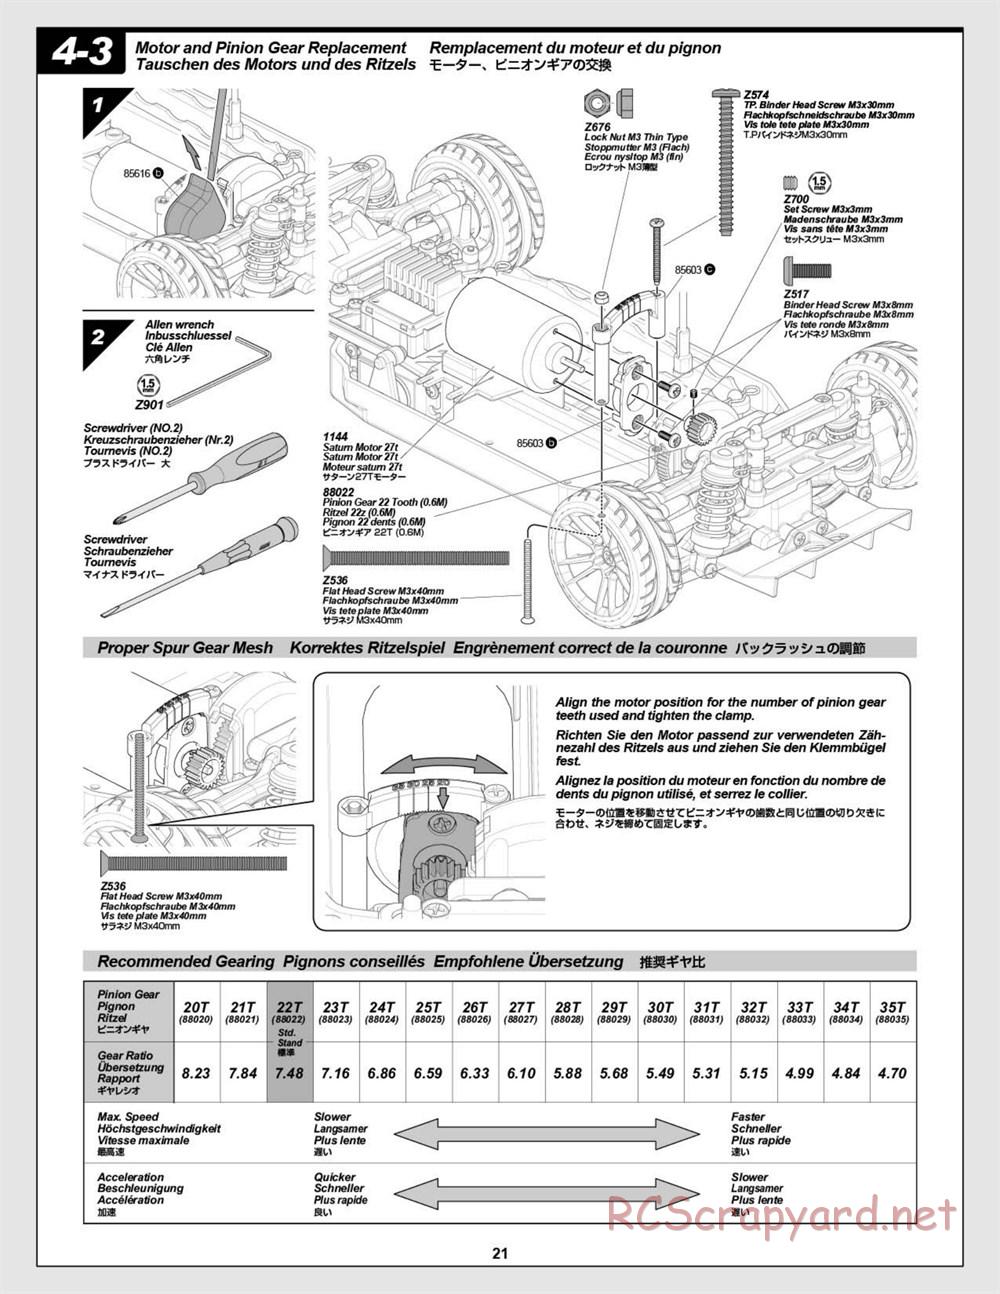 HPI - E10 - Manual - Page 21